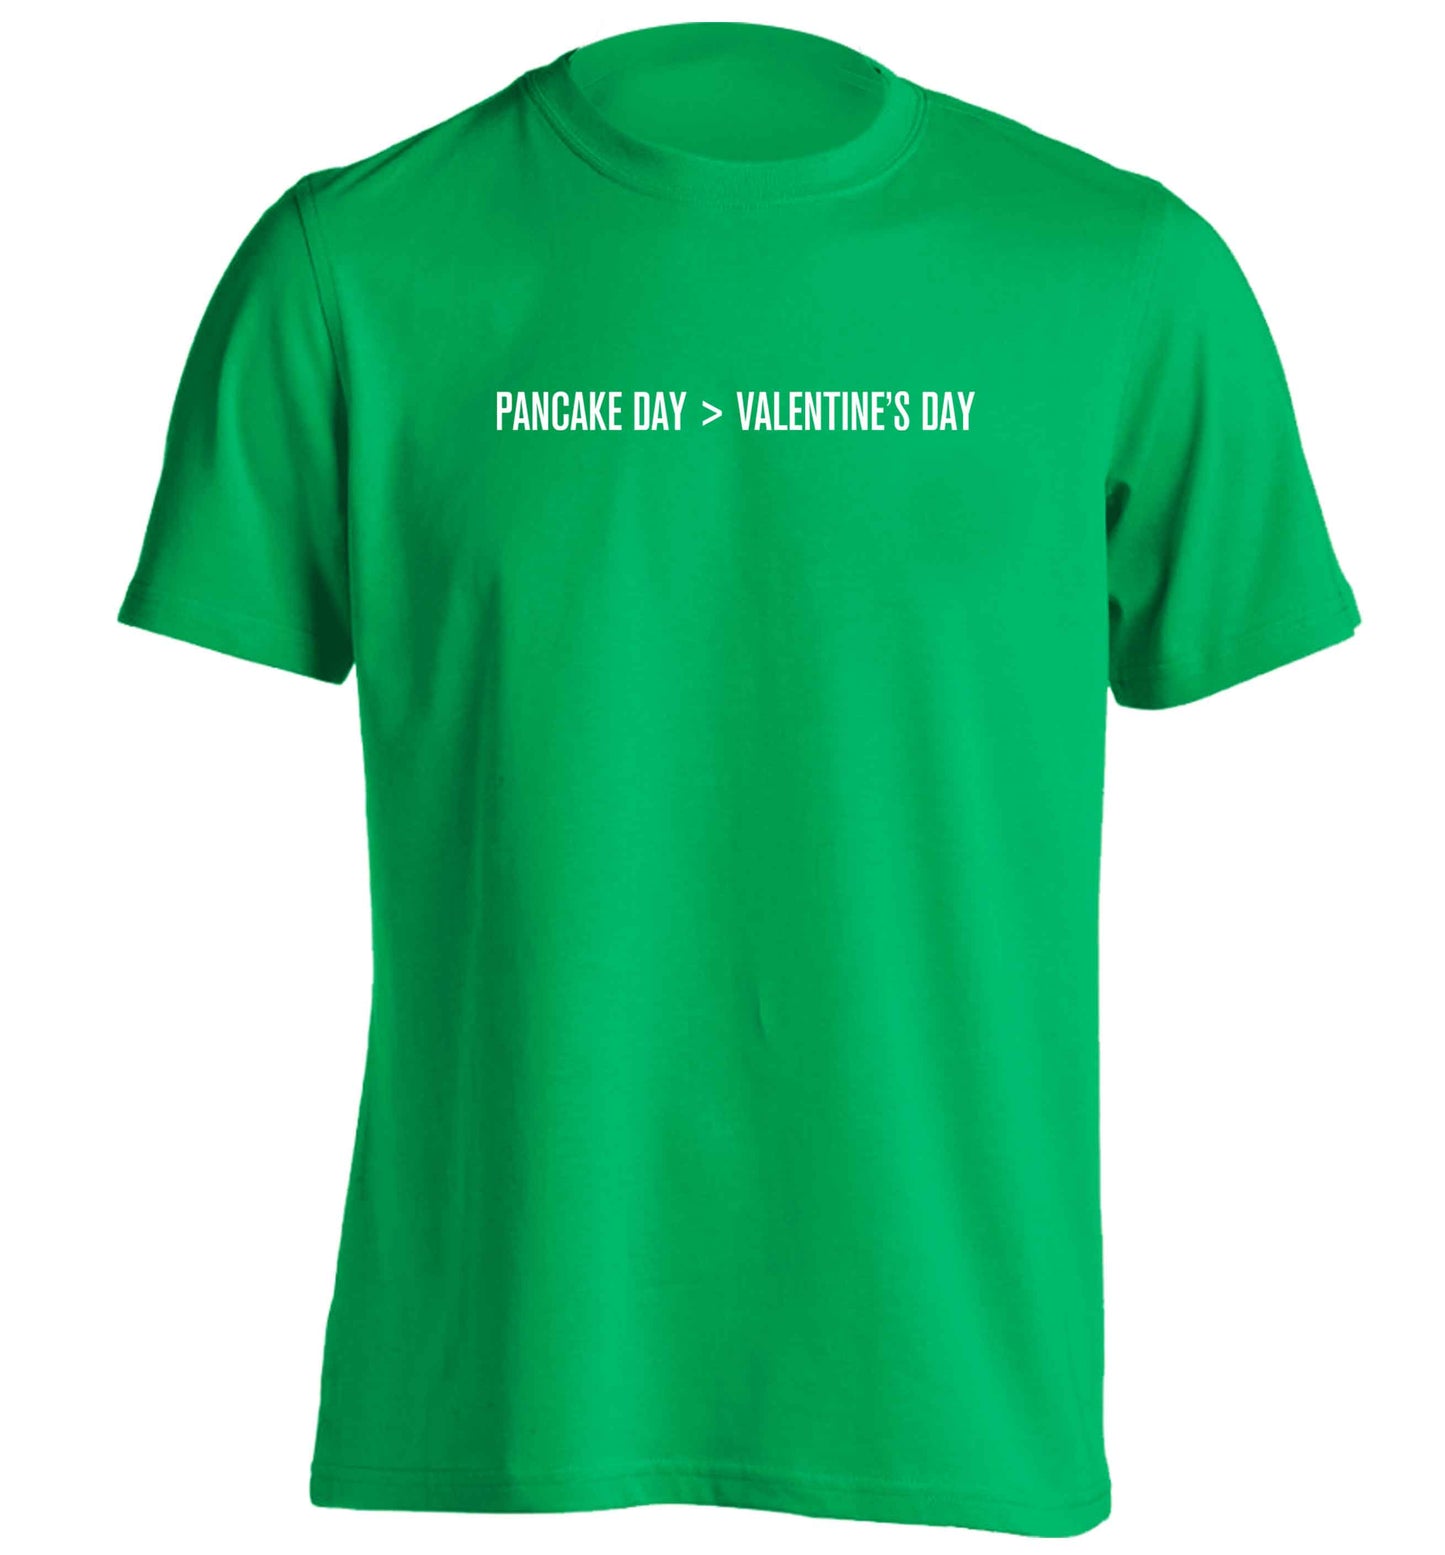 Pancake day > valentines day adults unisex green Tshirt 2XL